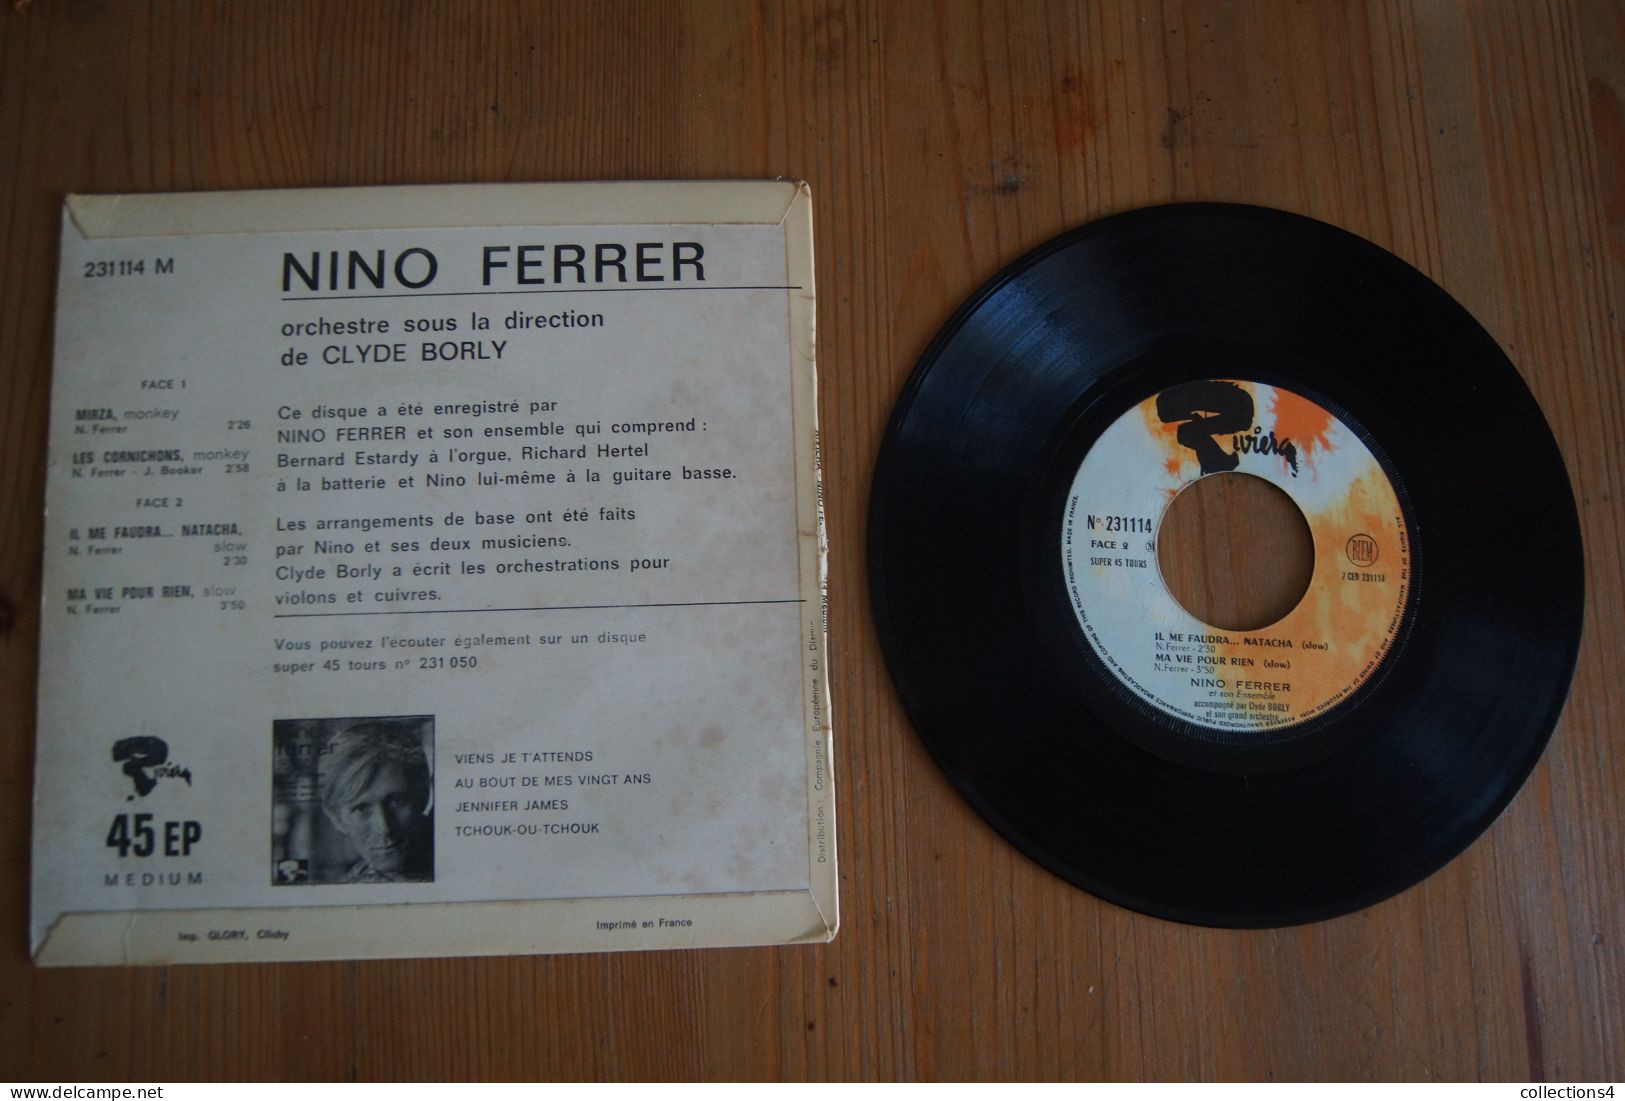 NINO FERRER Z AVEZ PAS VU MIRZA EP 1965 LANGUETTE - 45 Rpm - Maxi-Single